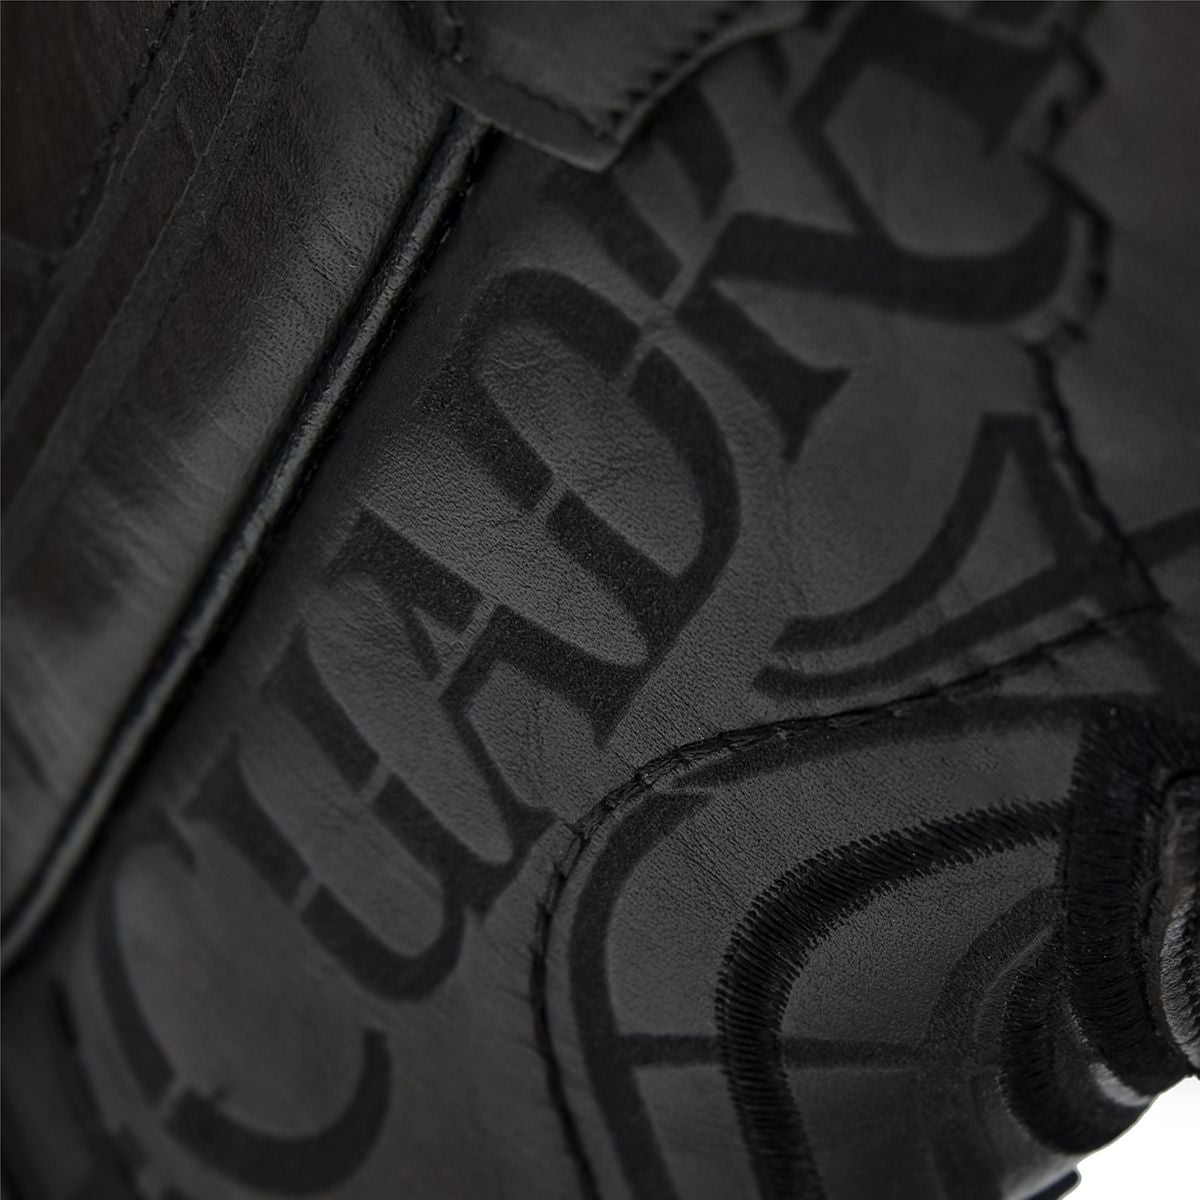 1J1NRS - Cuadra black casual fashion cowhide cowboy leather boots for men-CUADRA-Kuet-Cuadra-Boots